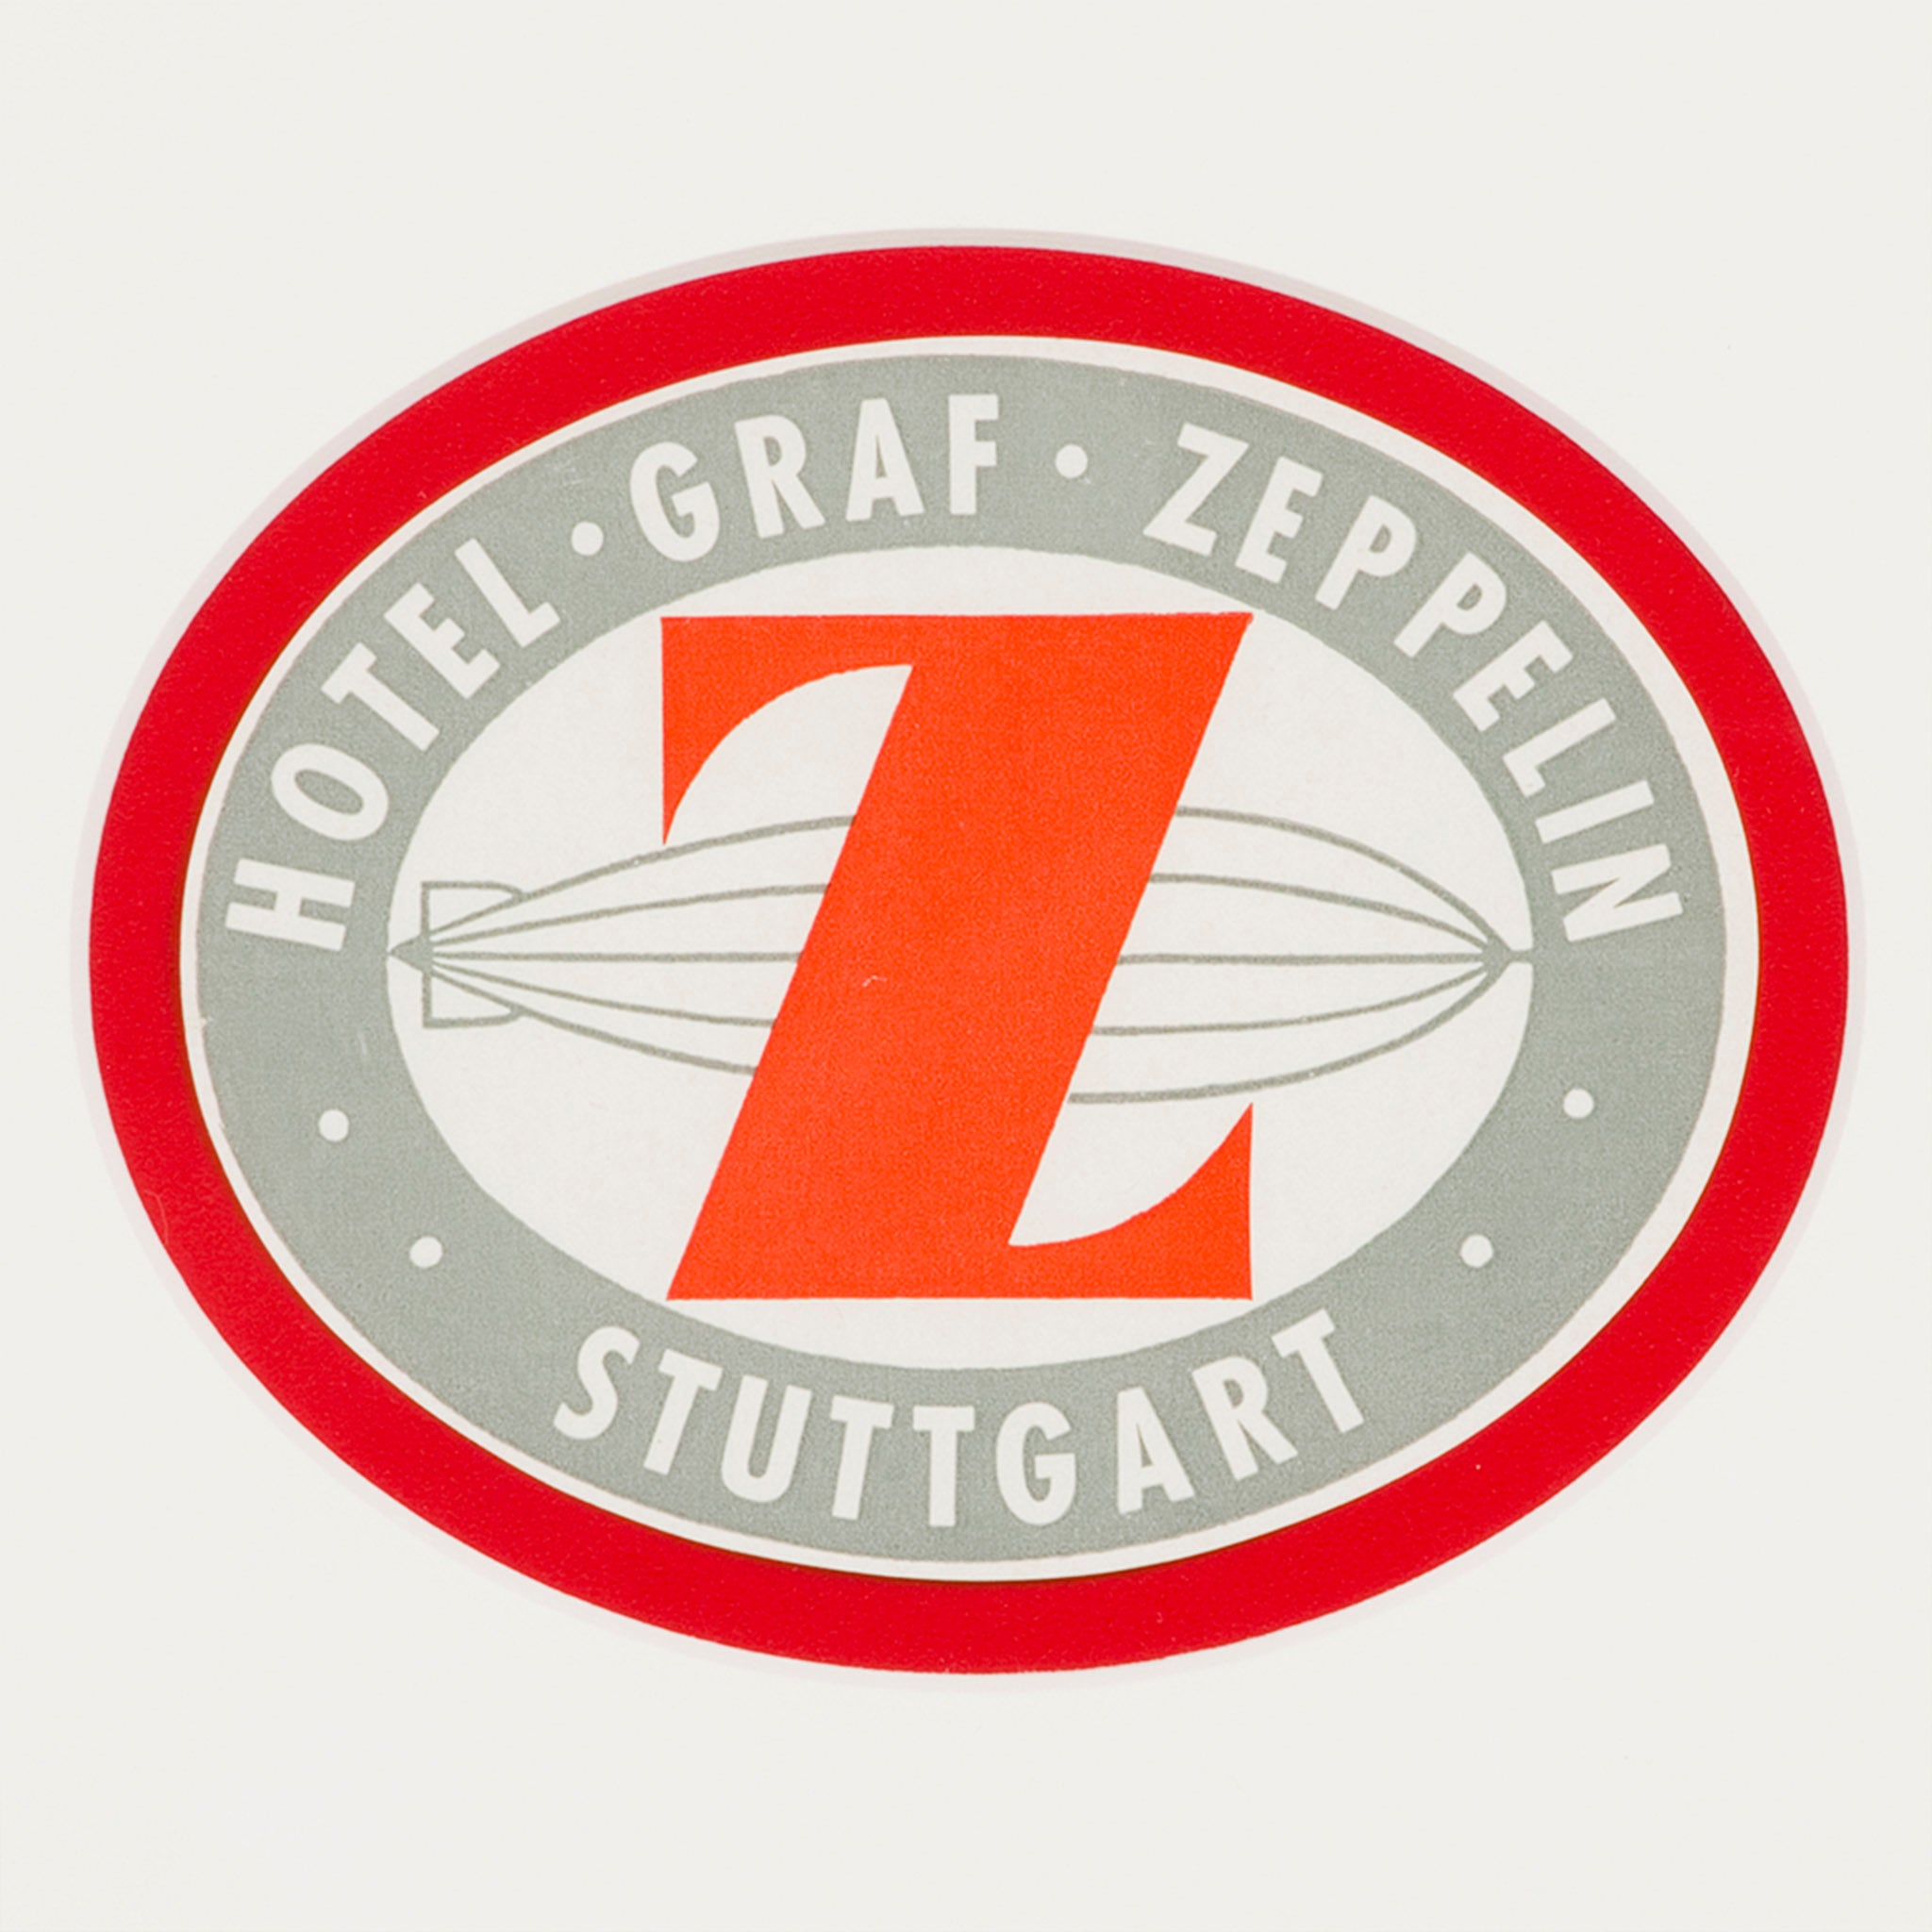 Hotel Graf Zeppelin Stuttgart Luggage Label